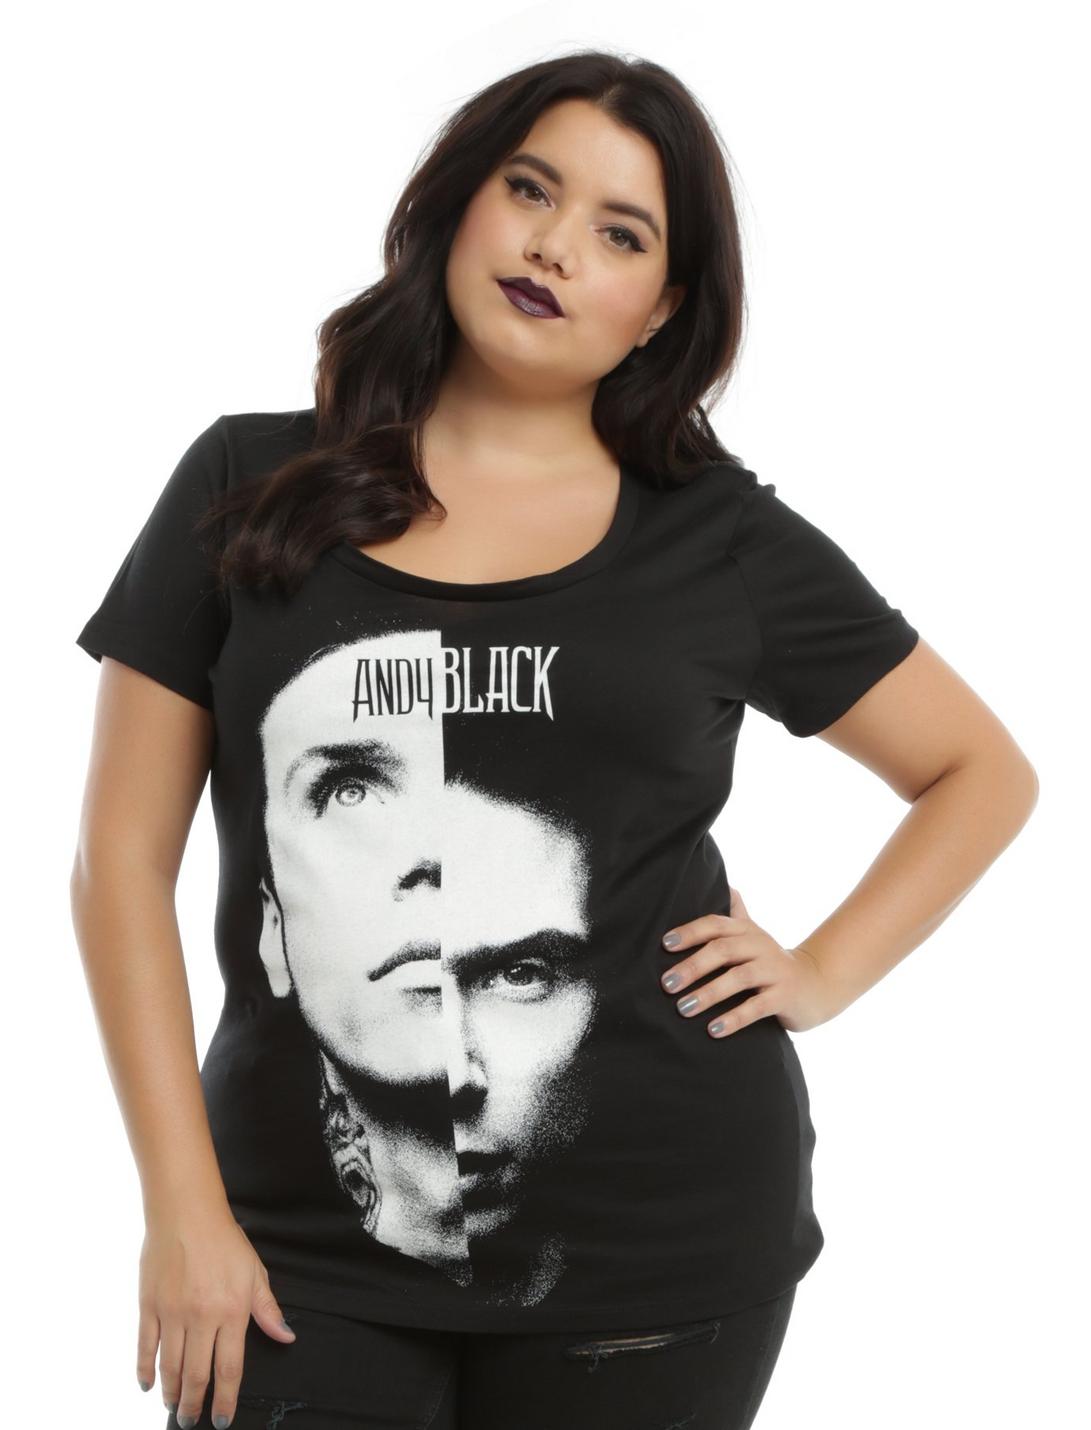 Andy Black Split Face Girls T-Shirt Plus Size, BLACK, hi-res